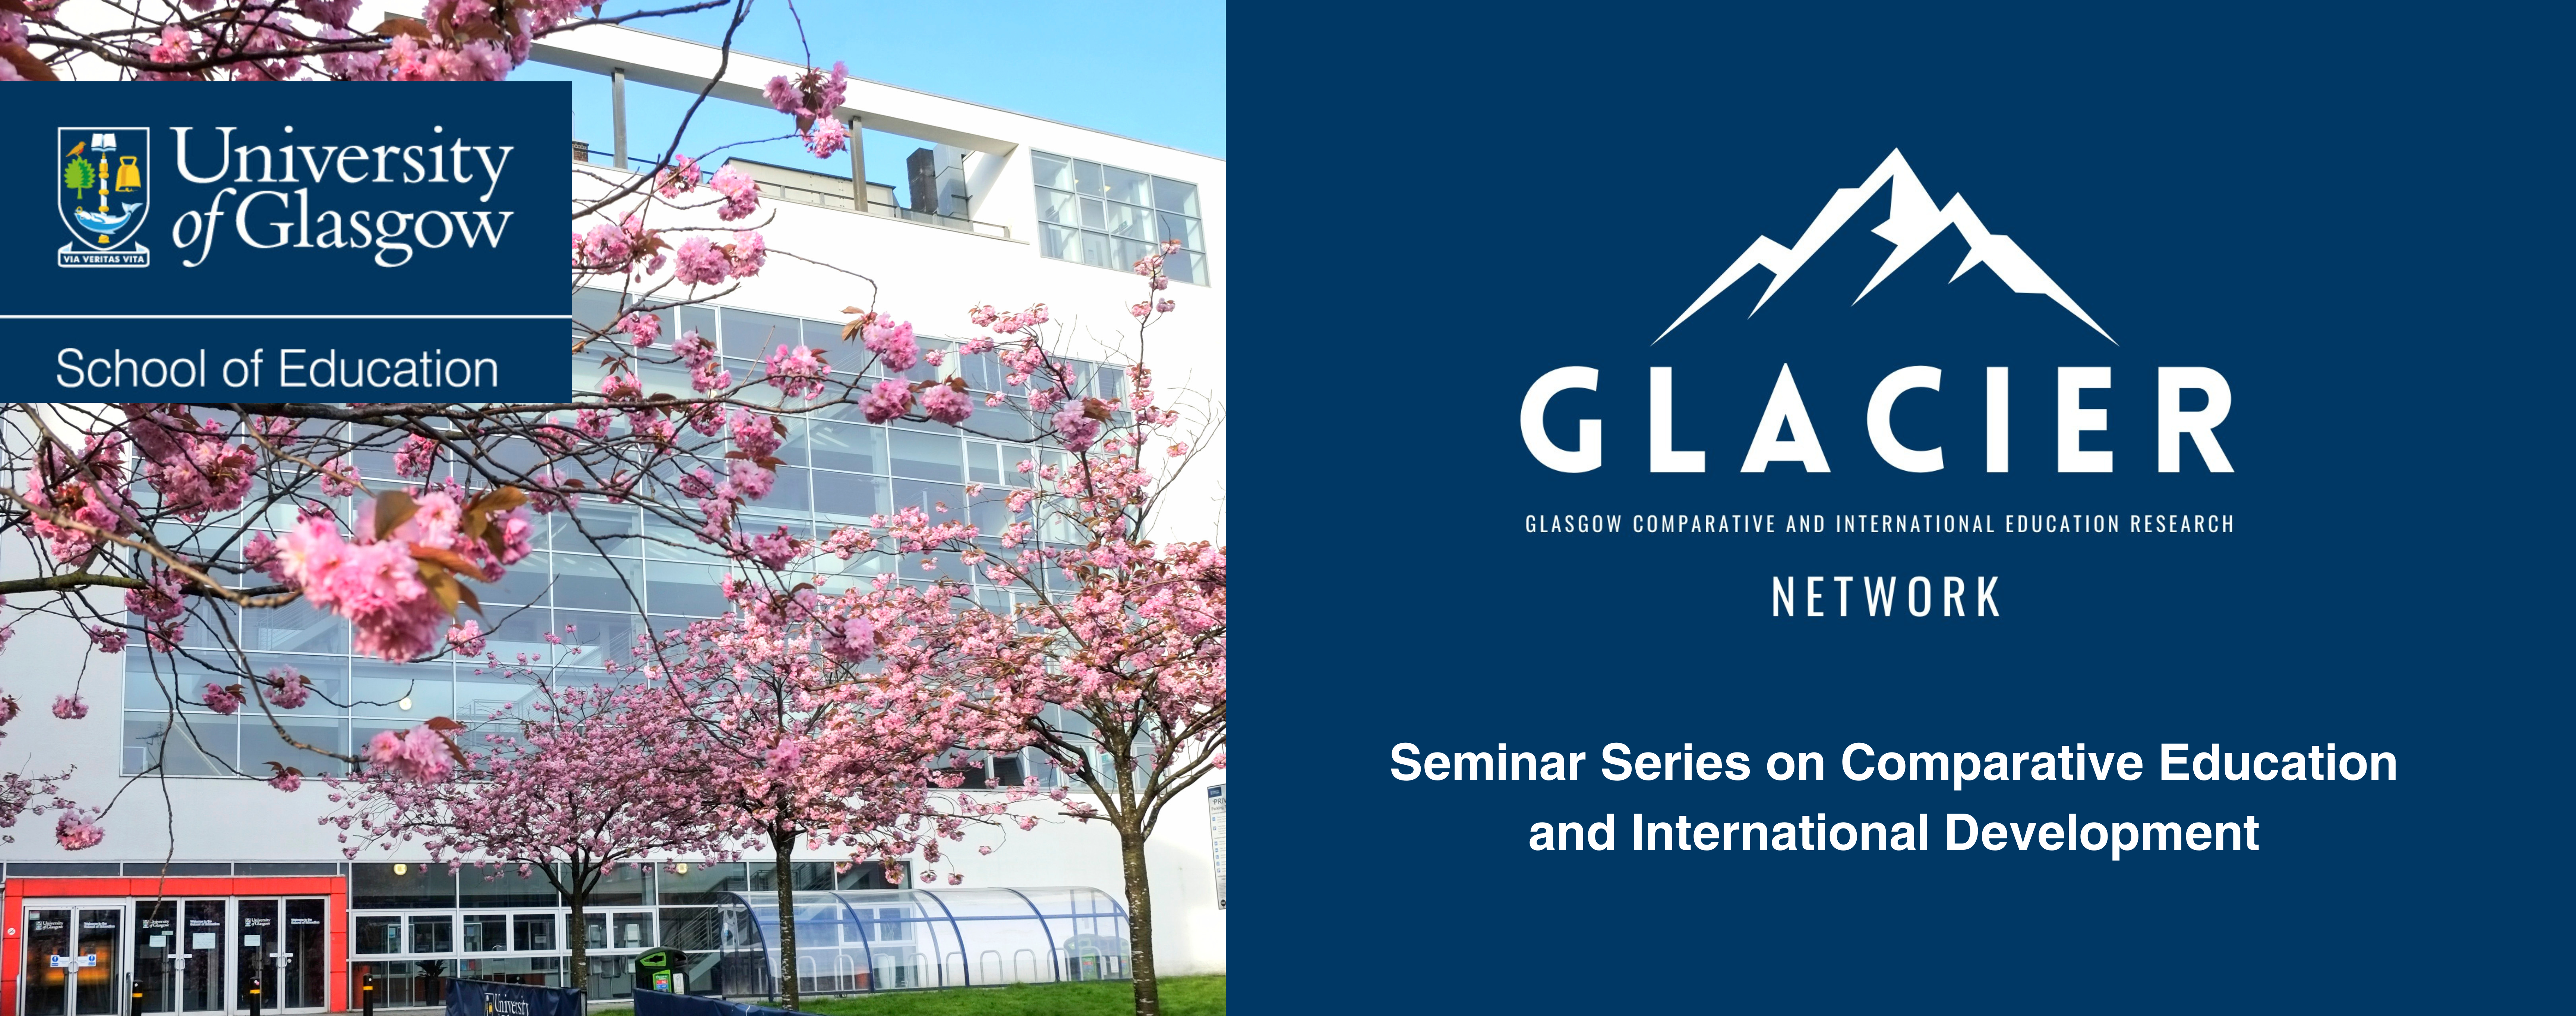 GLACIER Seminar Series on Comparative Education and International Development